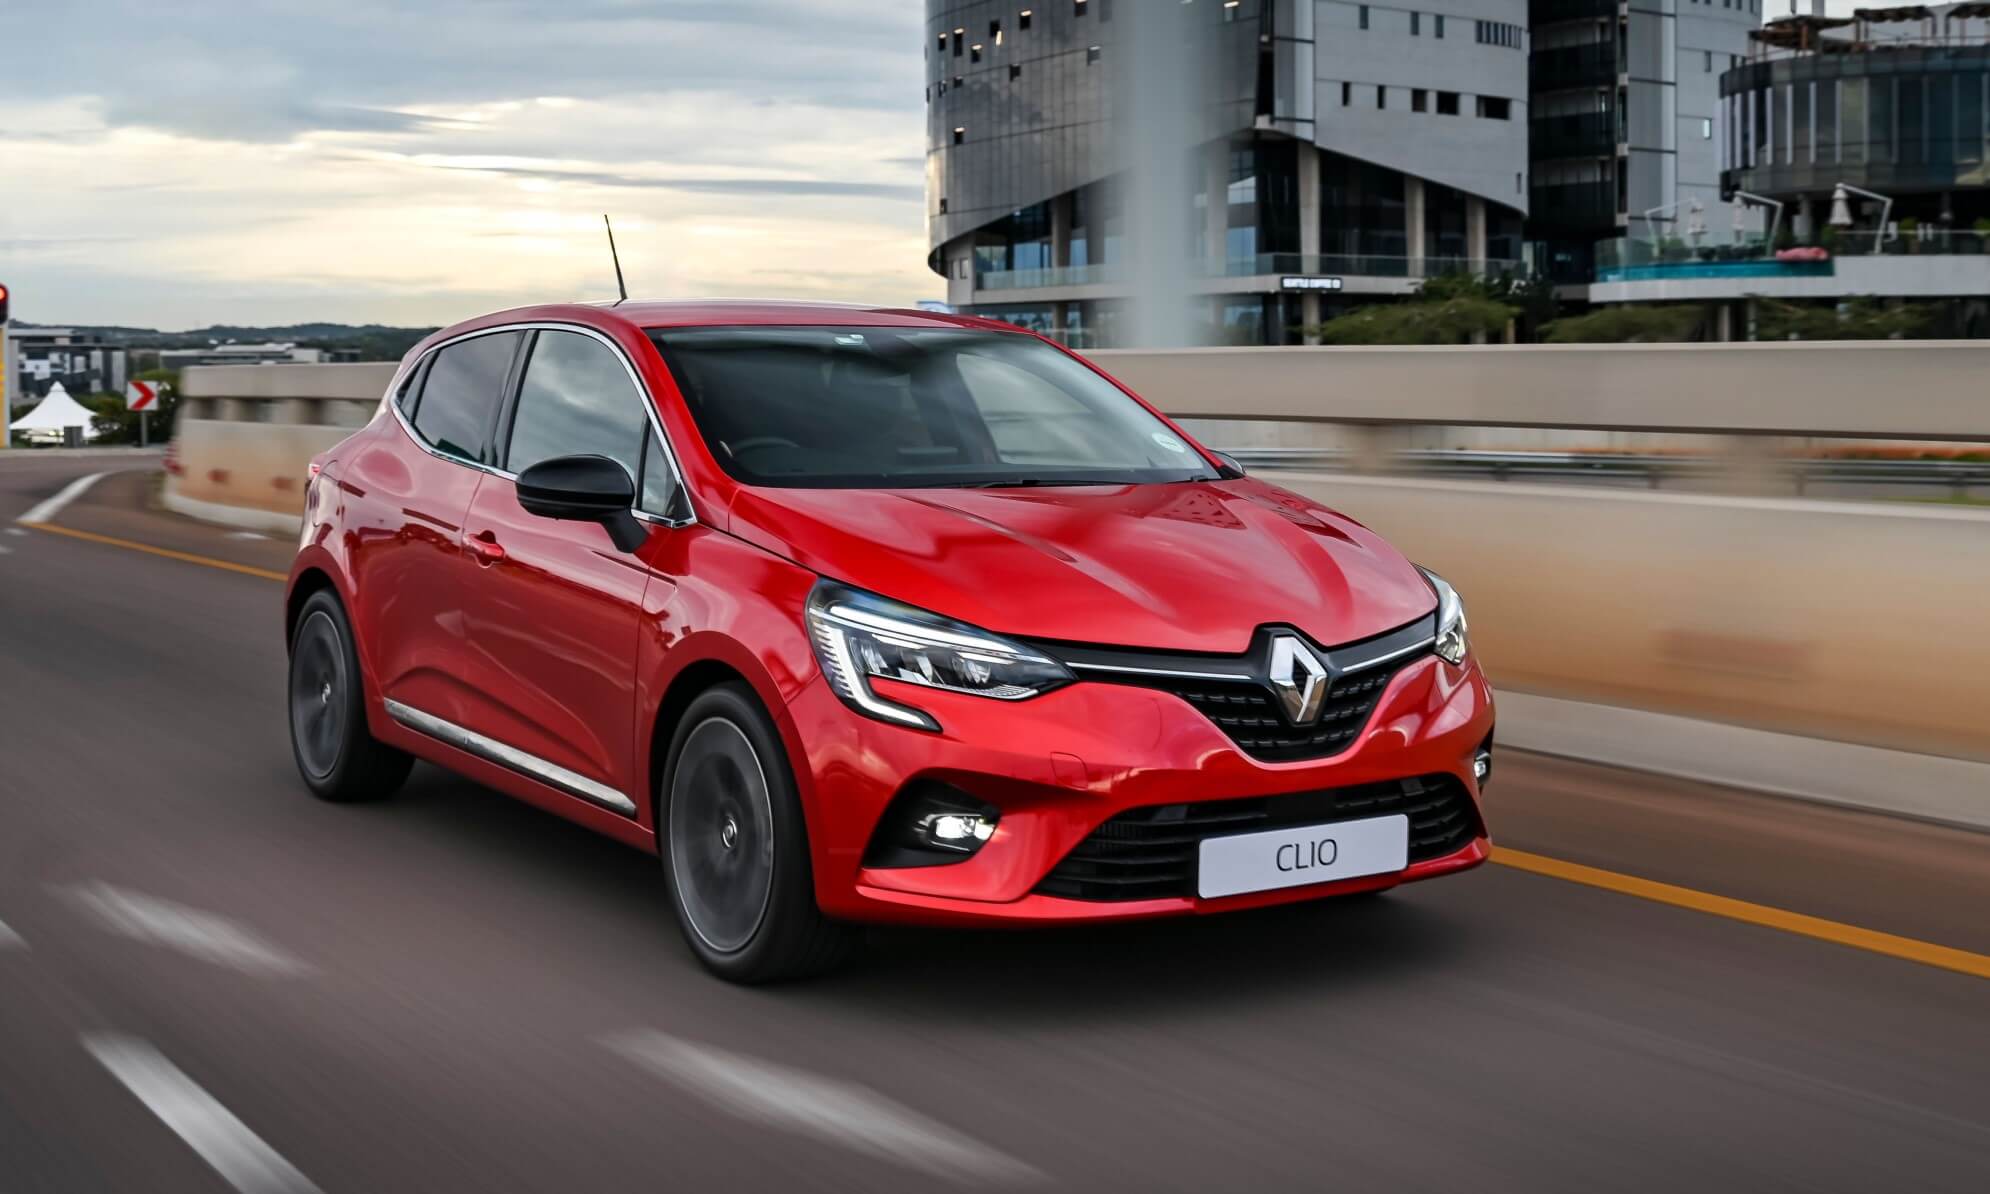 Renault Clio Intens Driven